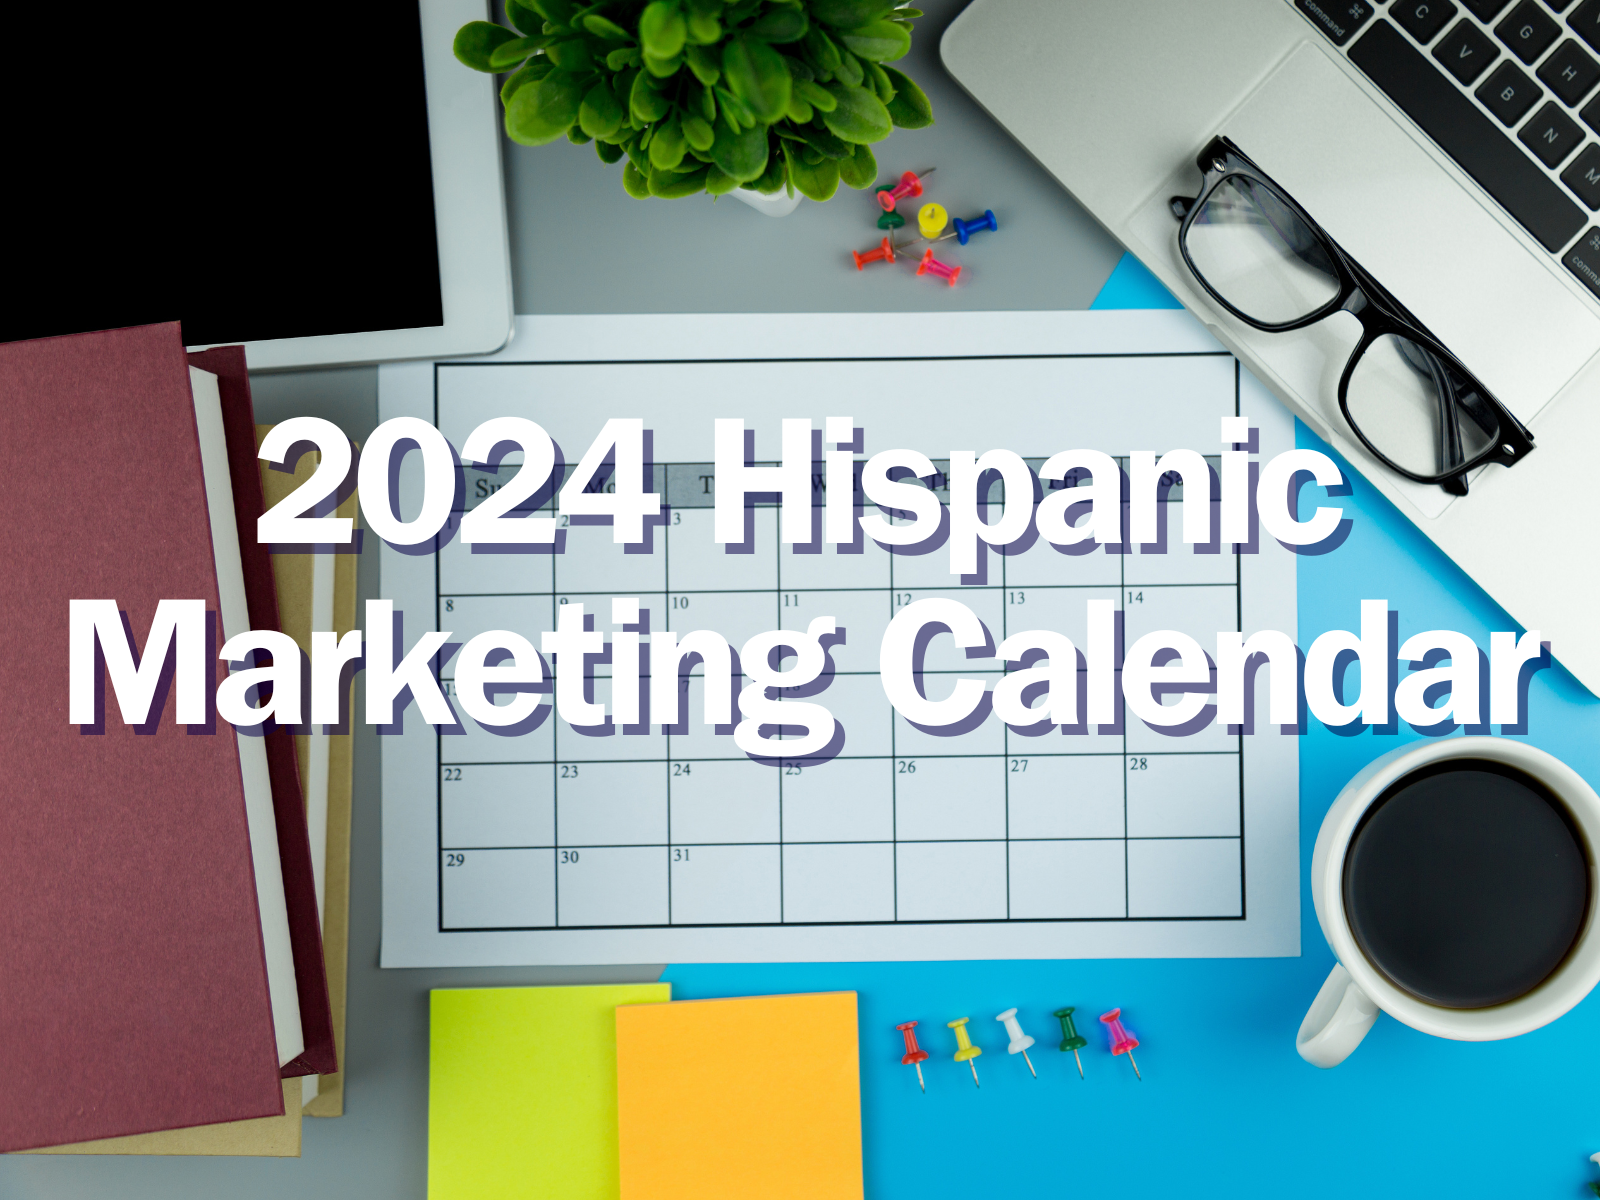 2024 Hispanic Marketing Calendar by LunaSol Media